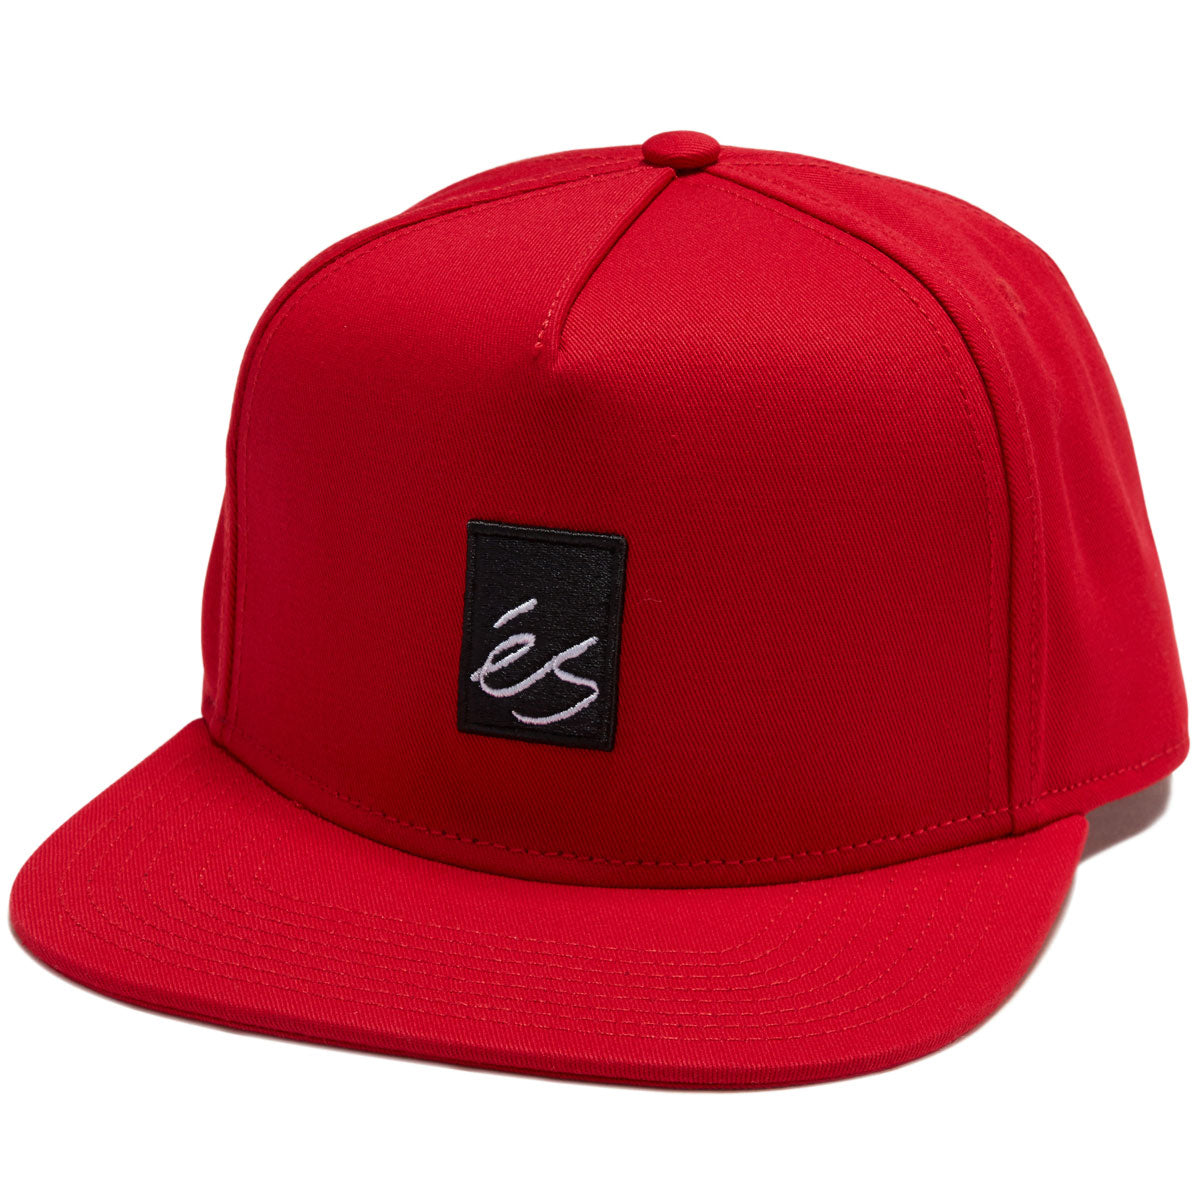 eS Main Block Snapback Hat - Red image 1